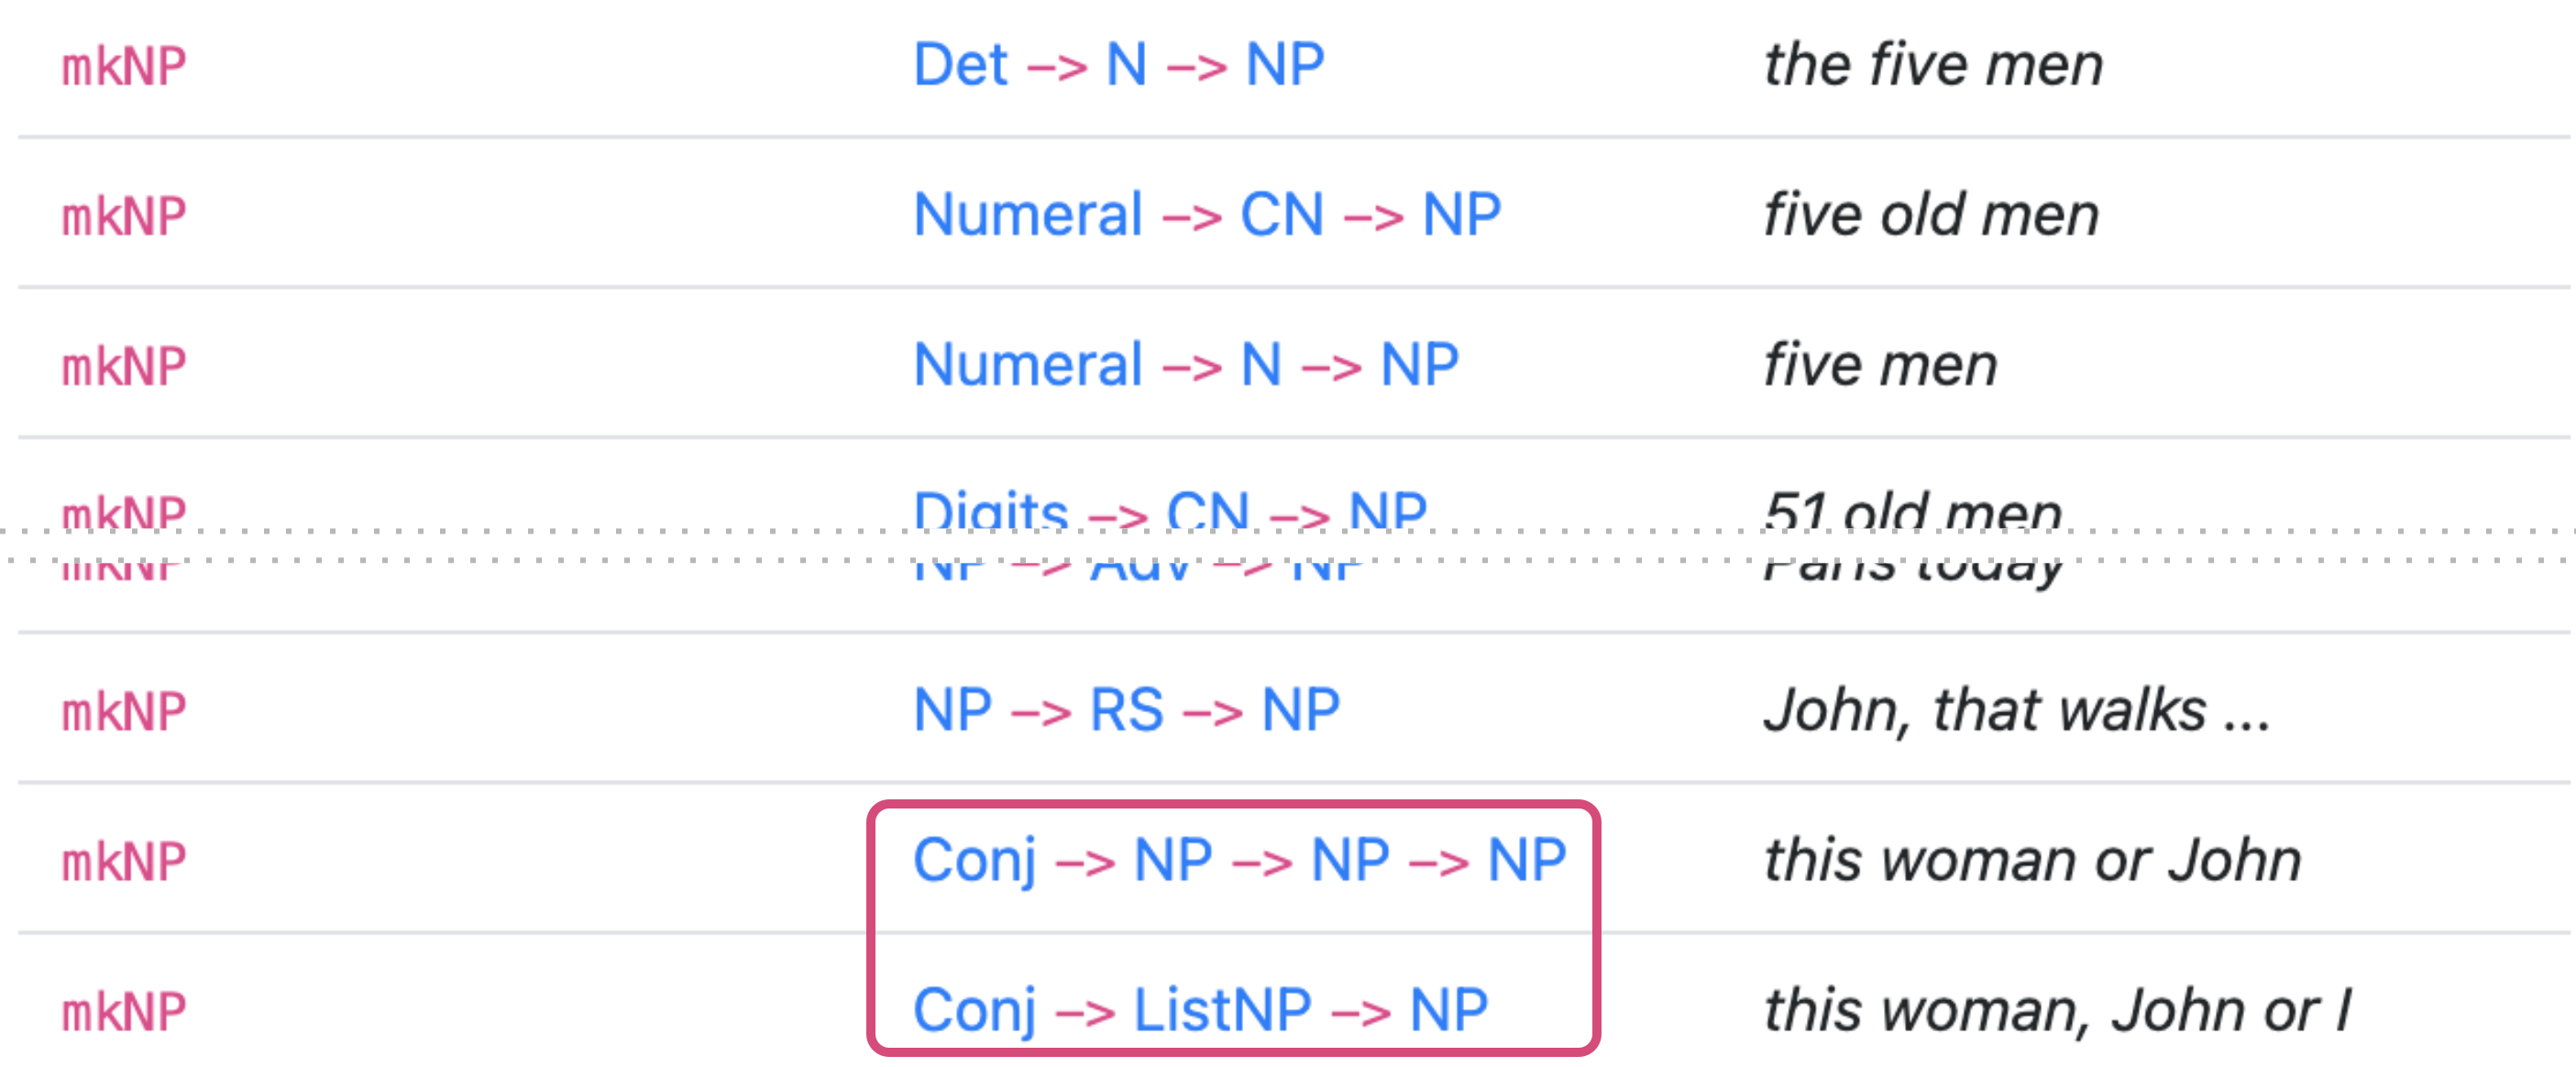 Screenshot of the RGL API, showing mkNP : Conj -> NP -> NP -> NP